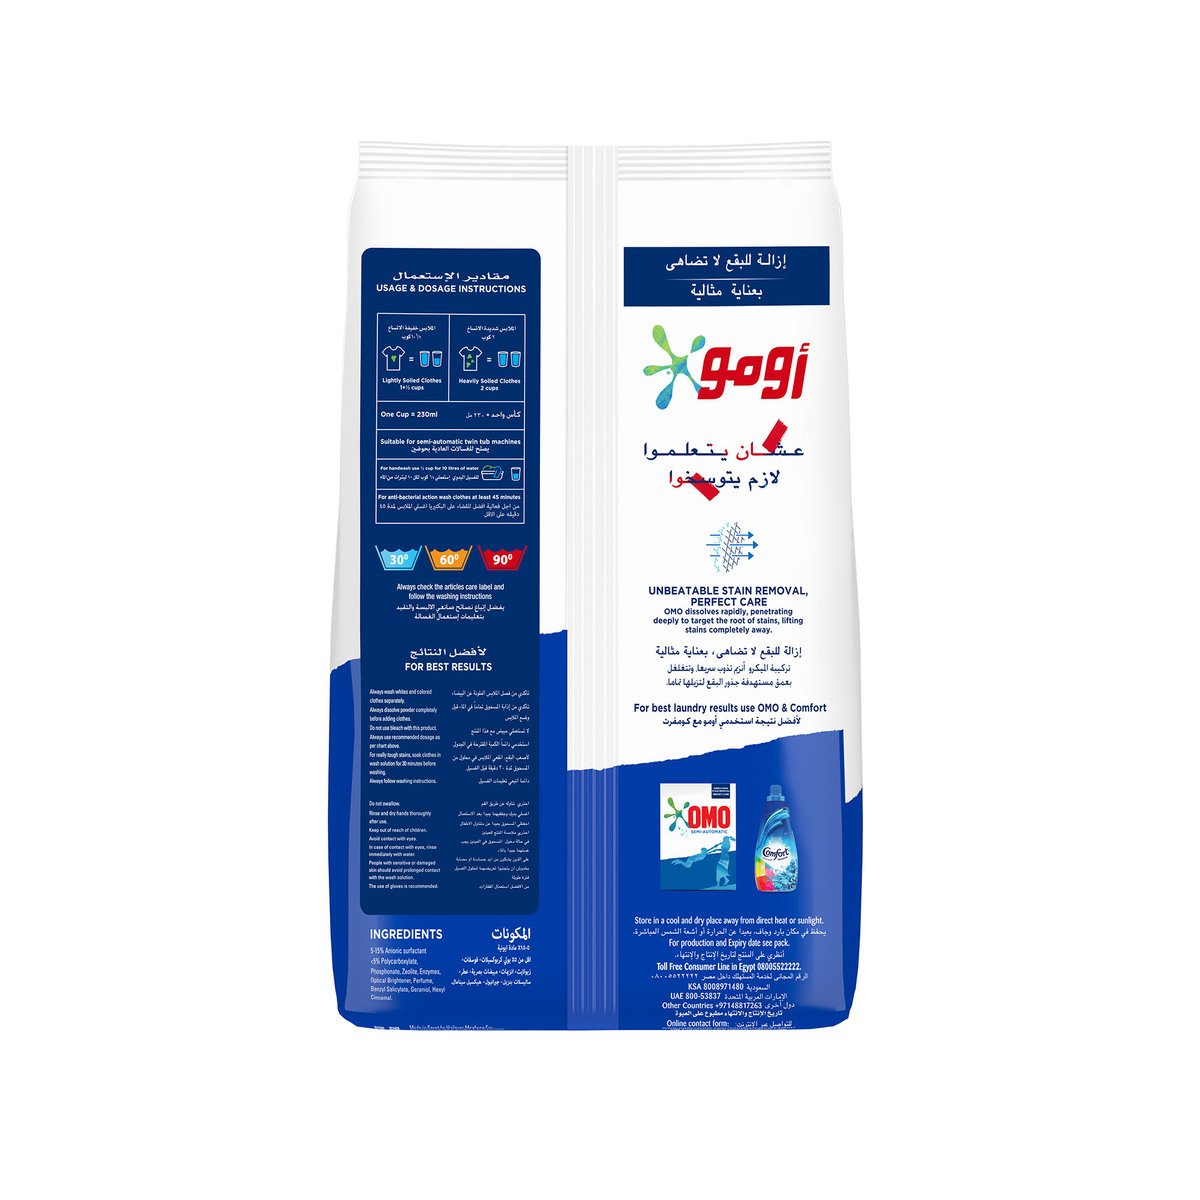 Omo Anti-Bacterial Semi-Automatic Washing Powder 5 kg